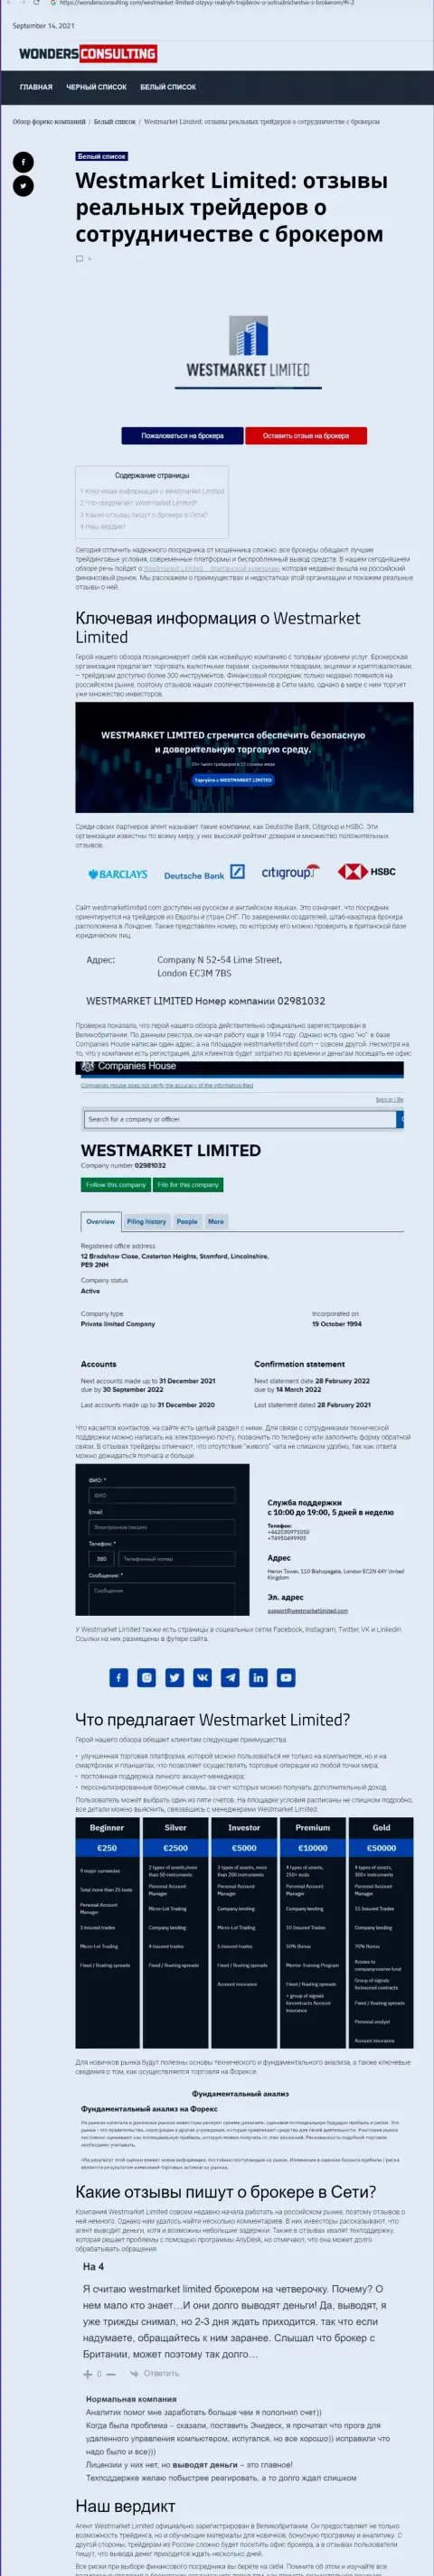 Информация о Форекс брокерской компании WestMarket Limited на онлайн-сервисе вондерконсалтинг ком